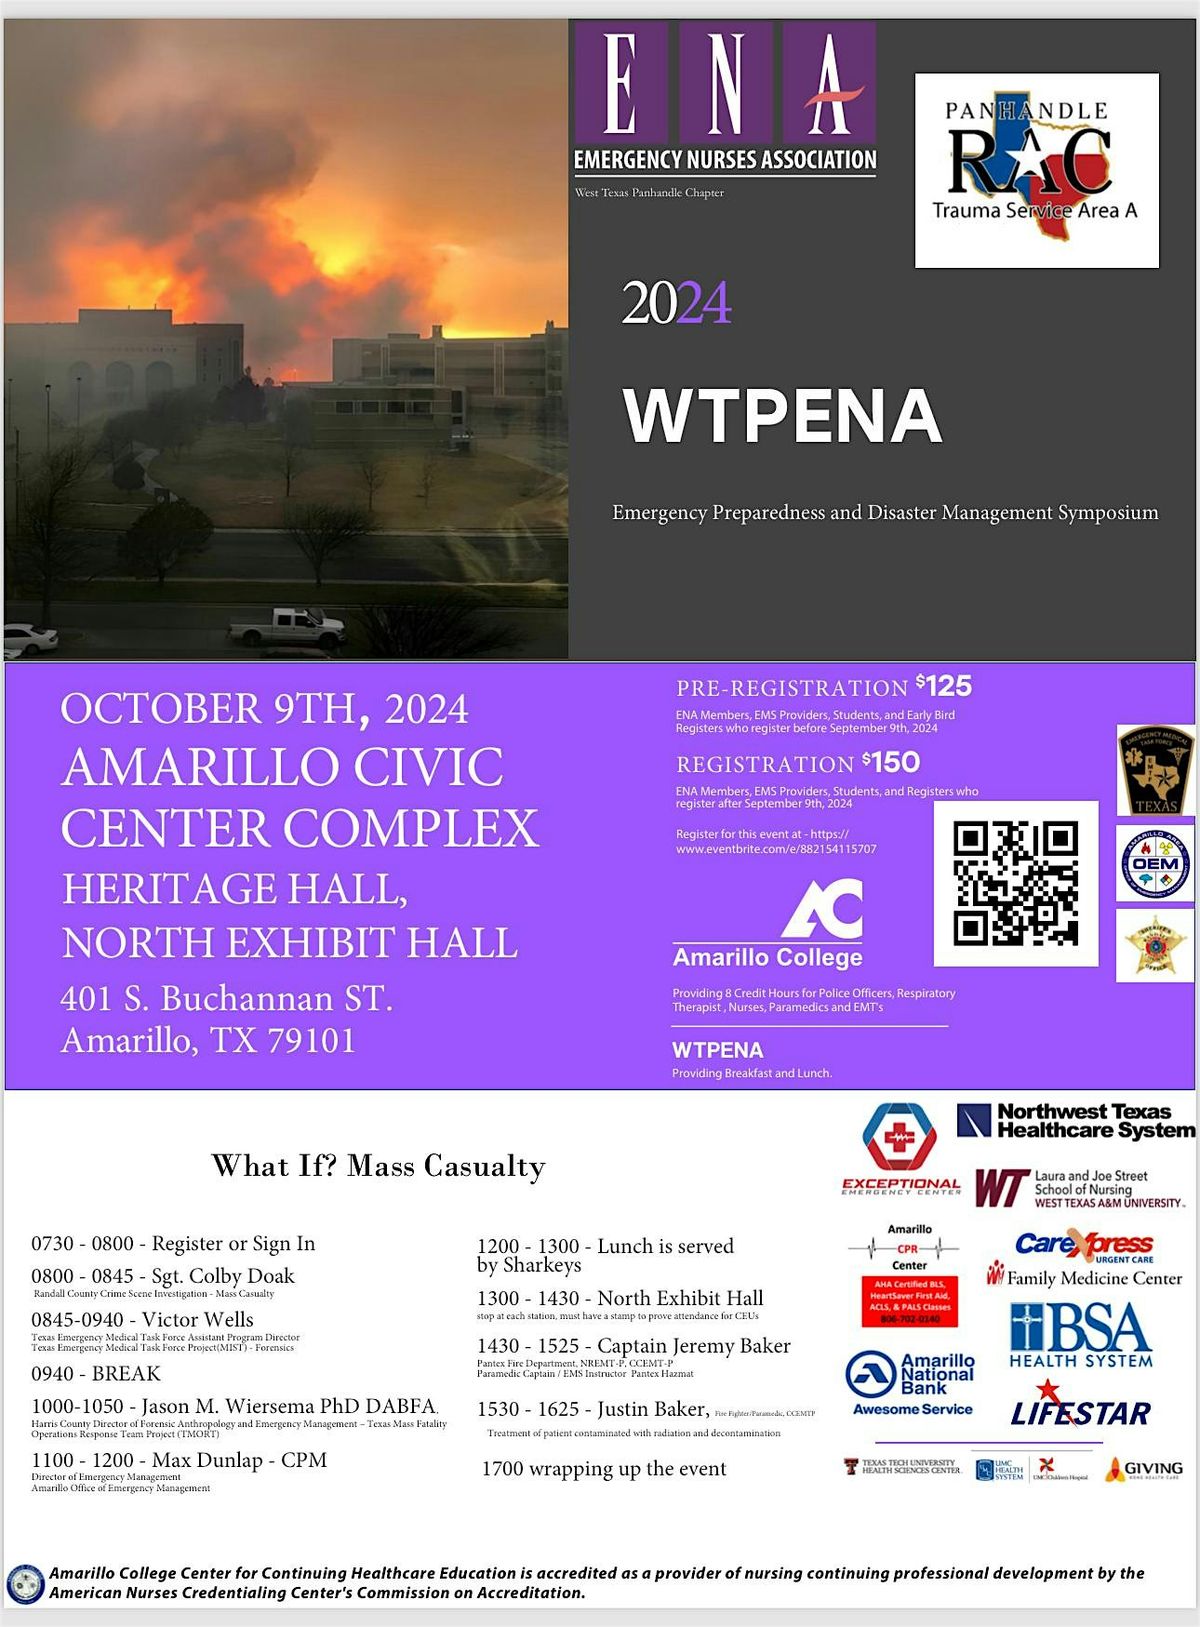 2024 WTPENA Disaster Management and Preparedness Symposium